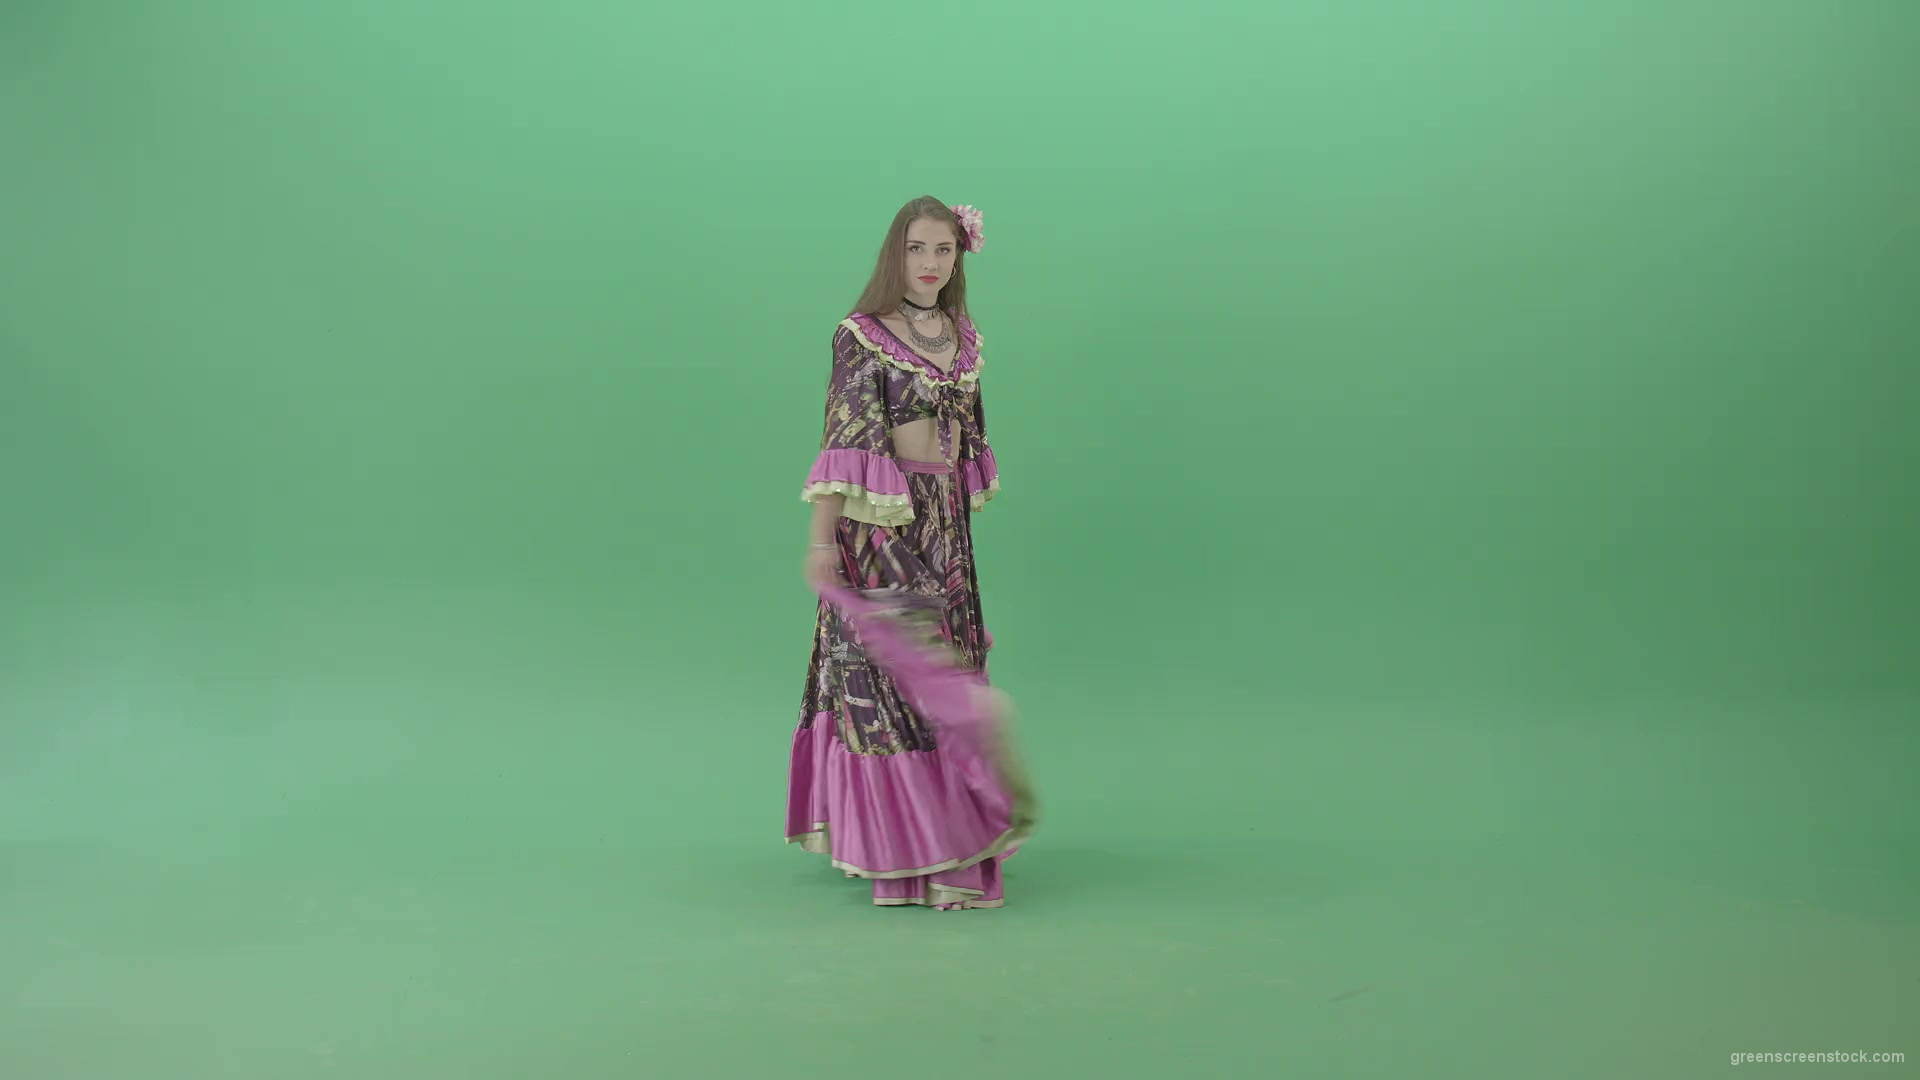 Lovely-Tzigane-romana-gypsy-women-waving-pink-dress-dancing-folk-isolated-in-green-screen-studio-4K-Green-Screen-Video-Footage-1920_001 Green Screen Stock